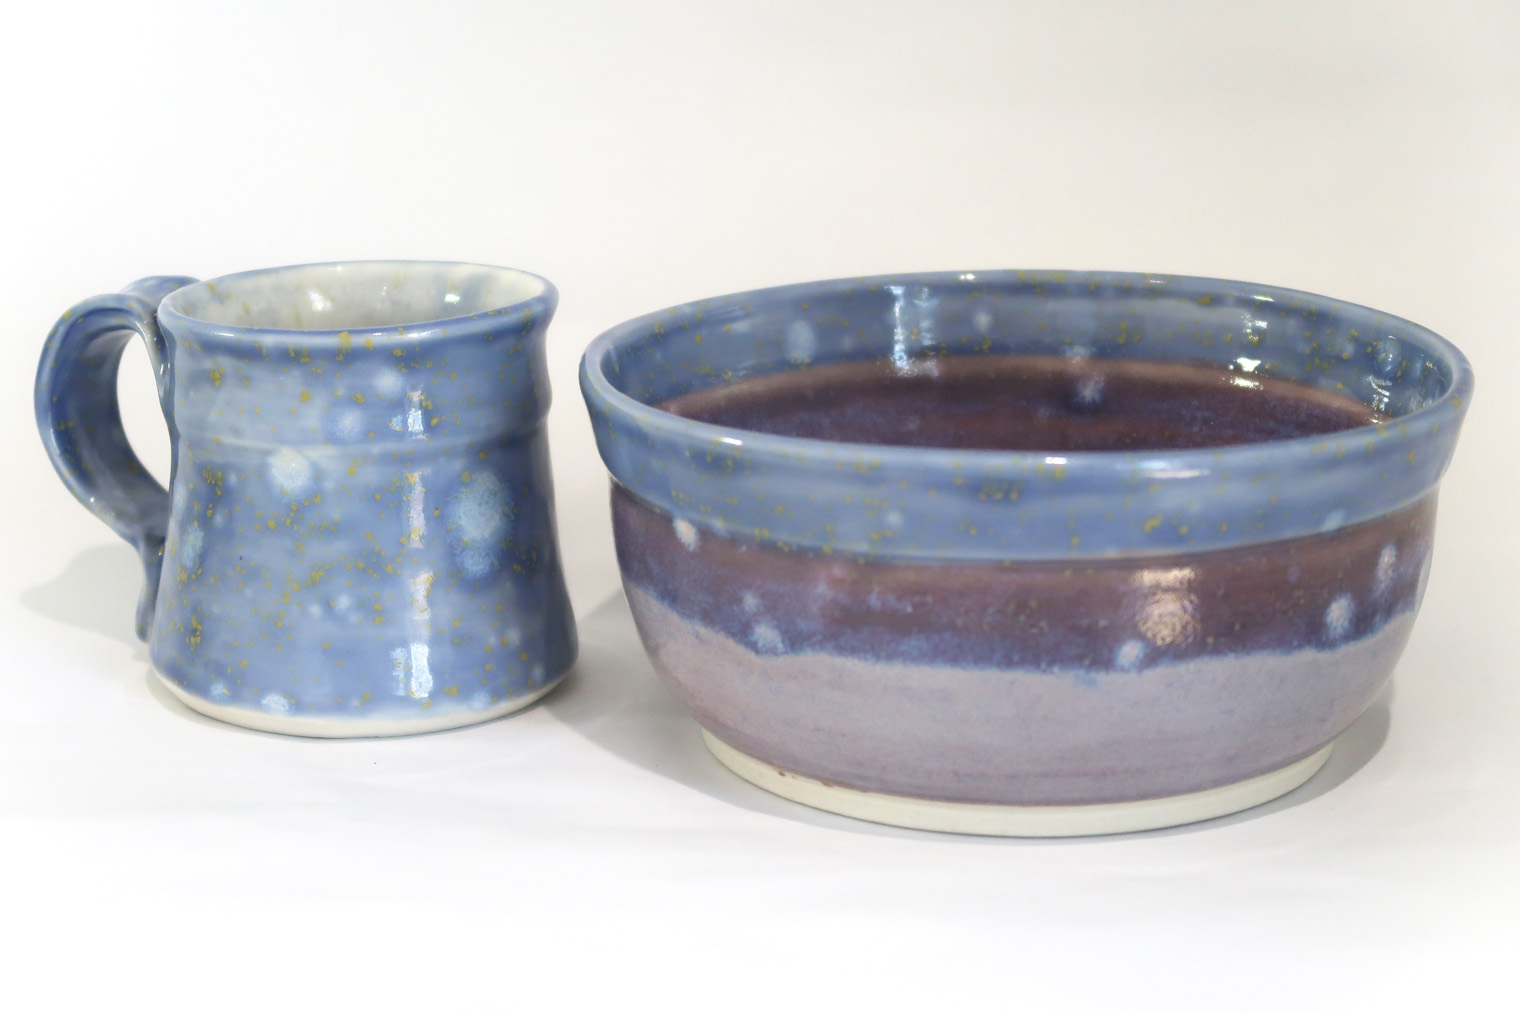 Porcelain Mug and Bowl set with Blue Hydrangea on mug, Blue Hydrangea and Lavender Mist glaze combo on bowl.